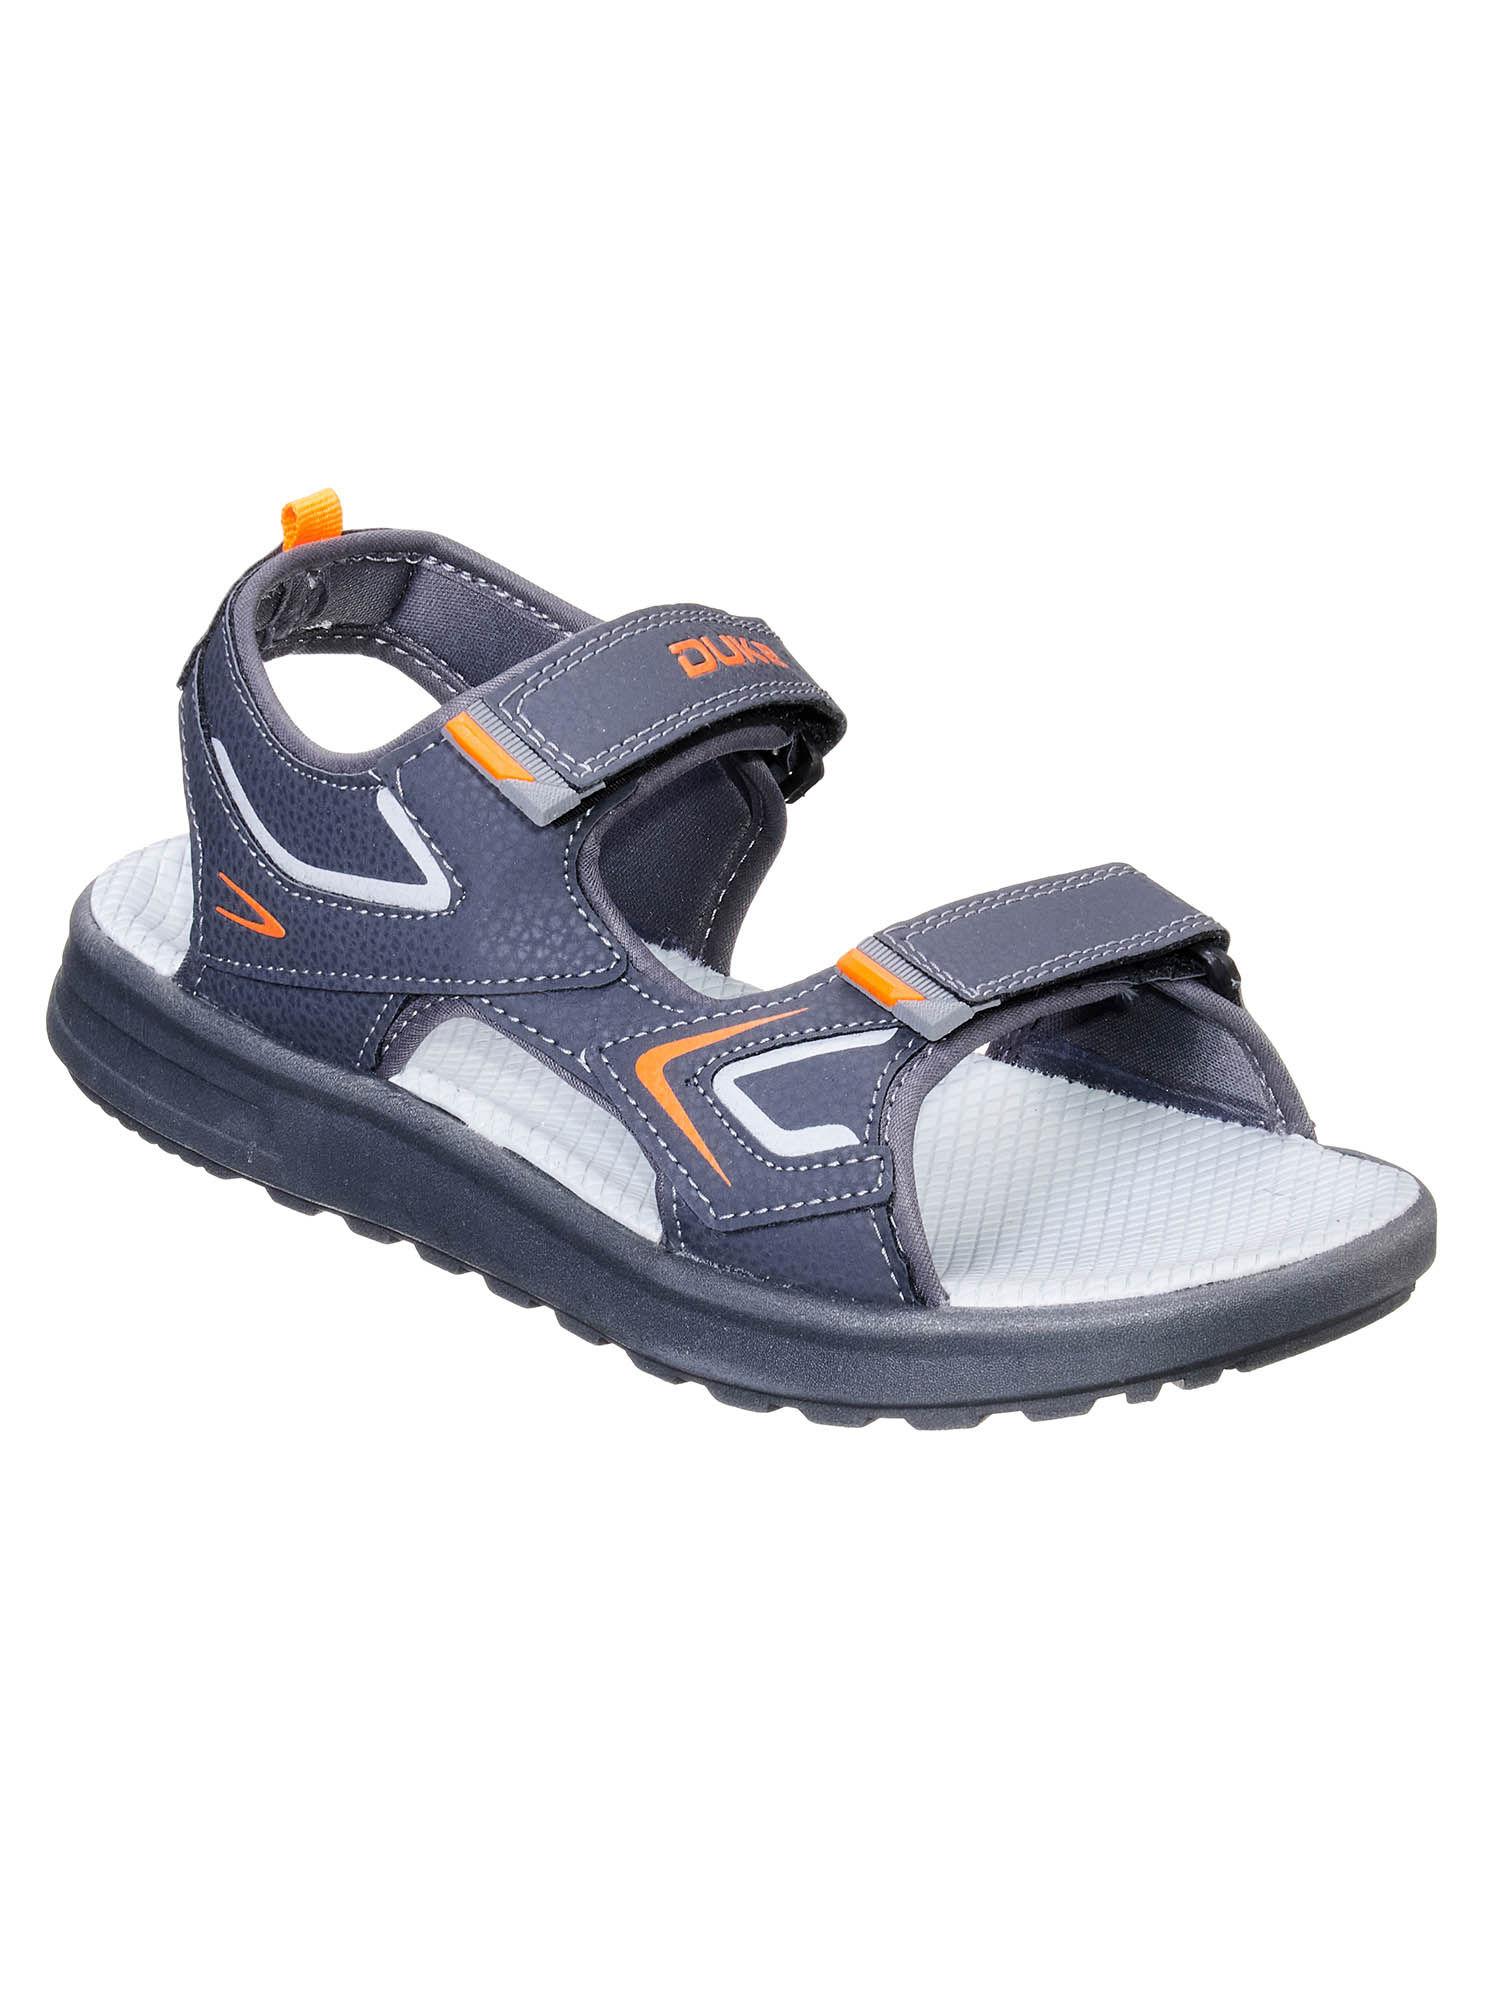 solid-grey-men-sandals